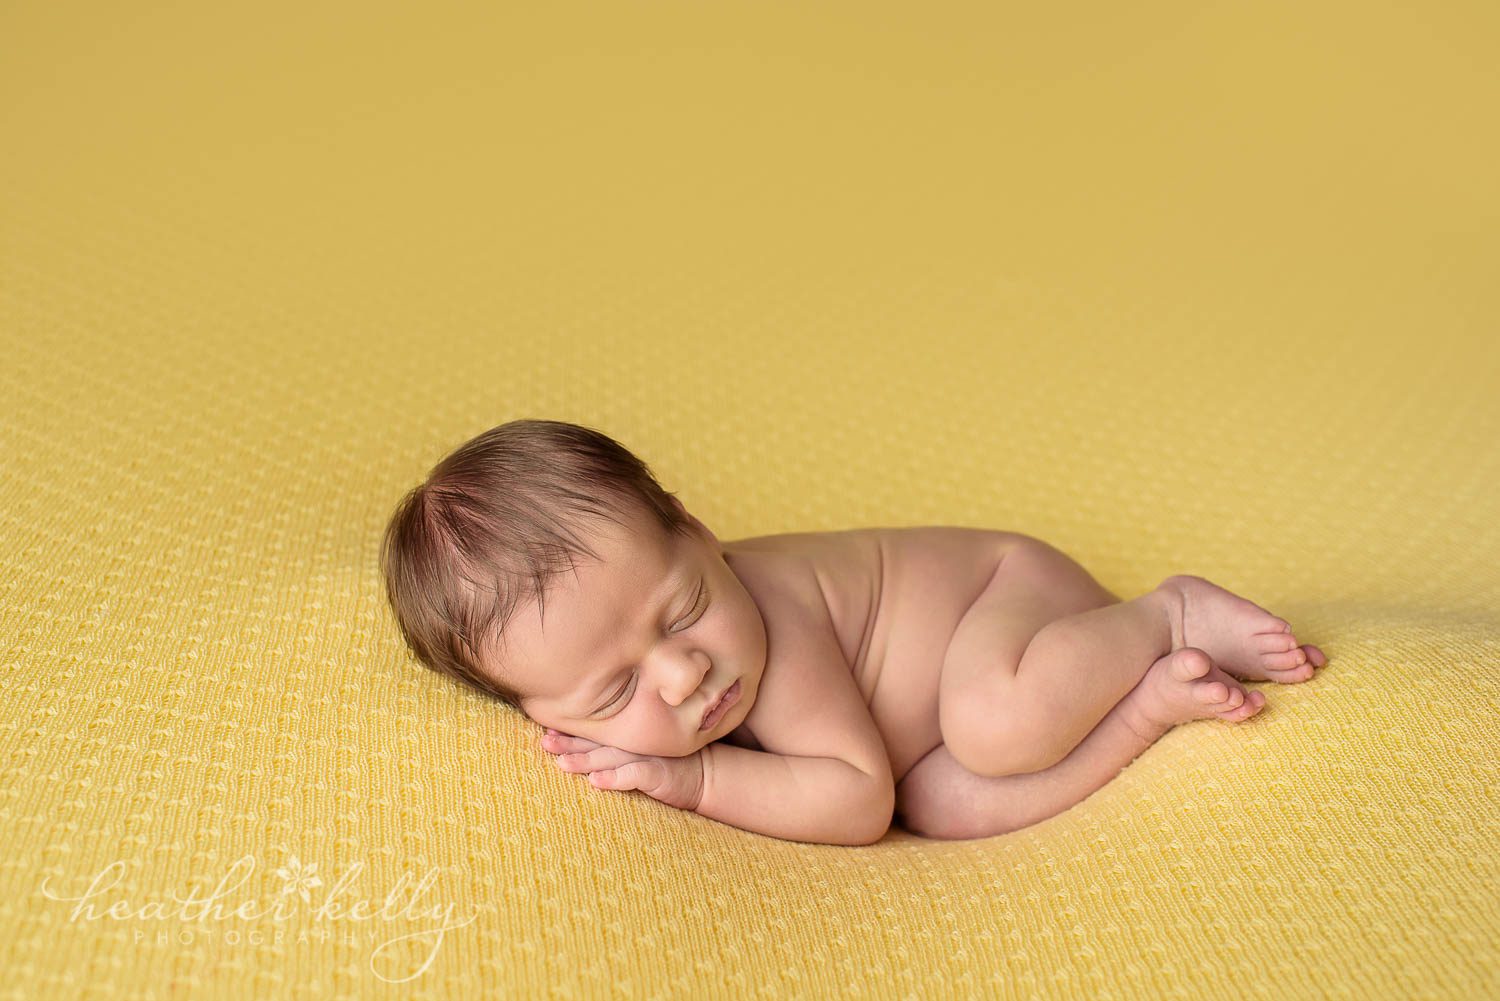 sleeping newborn boy naked on yellow